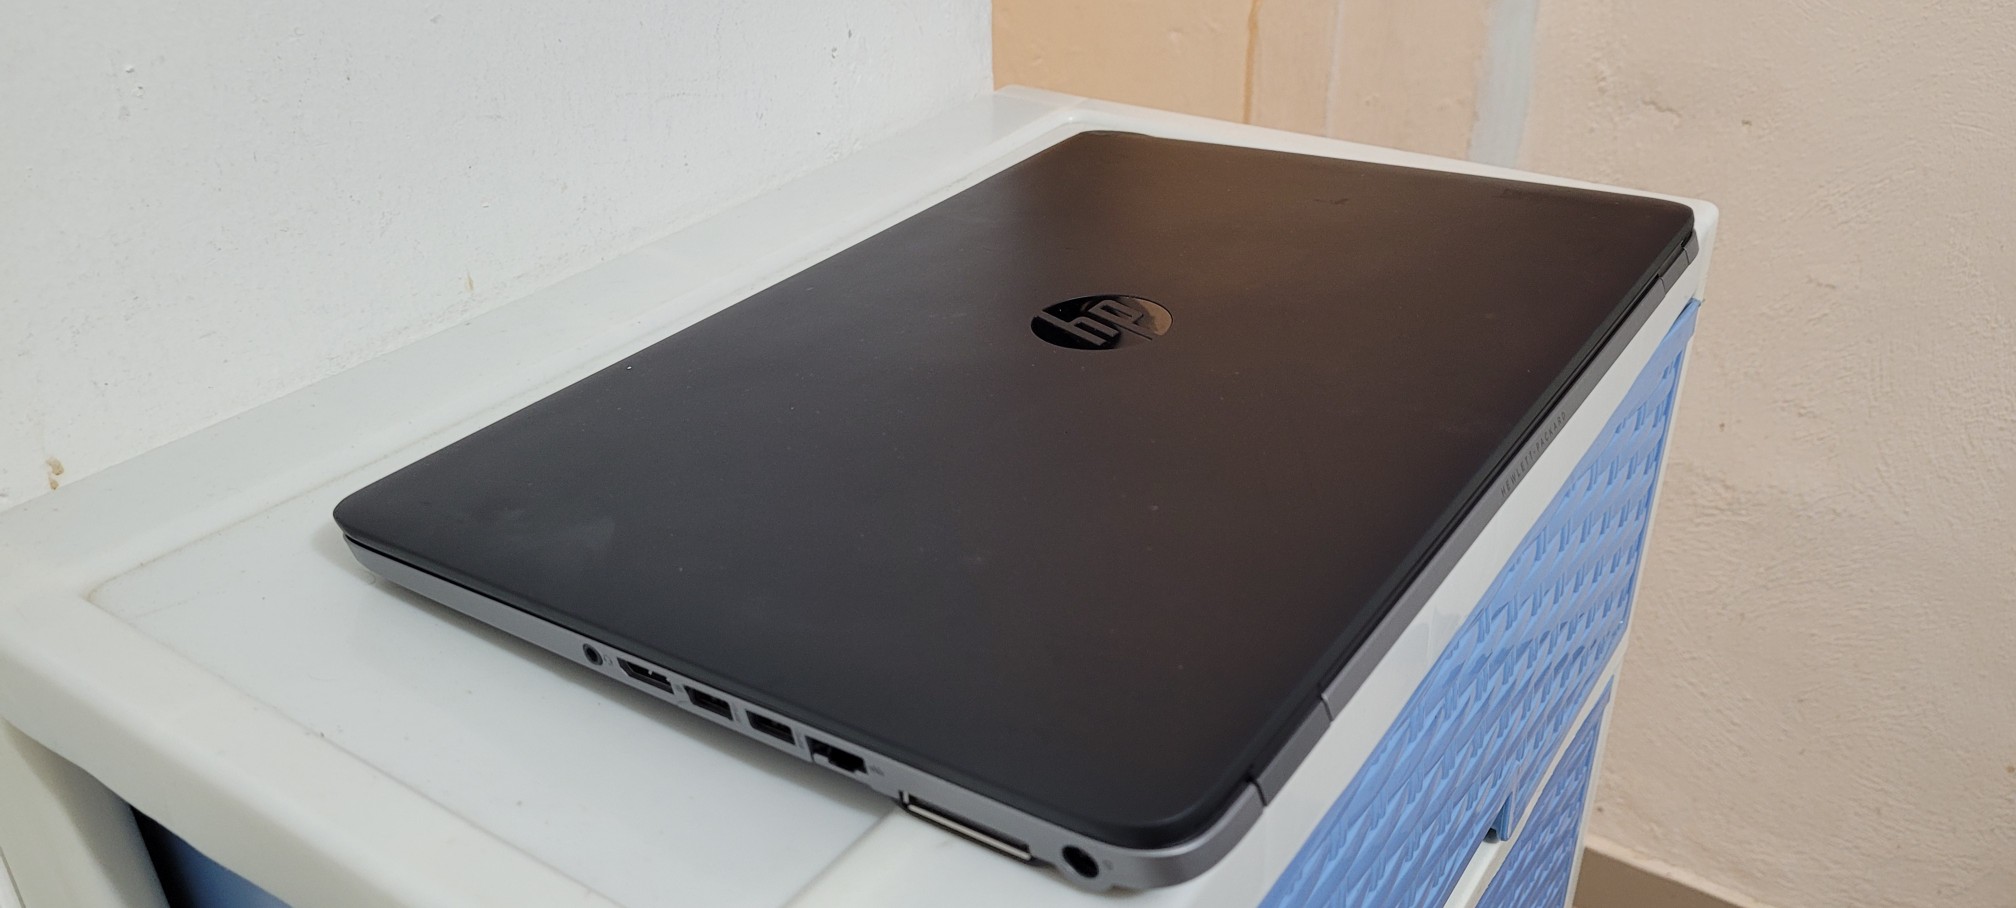 computadoras y laptops - Laptop hp Elitebook Core i7 Ram 16gb SSD 500GB Video 8gb 2